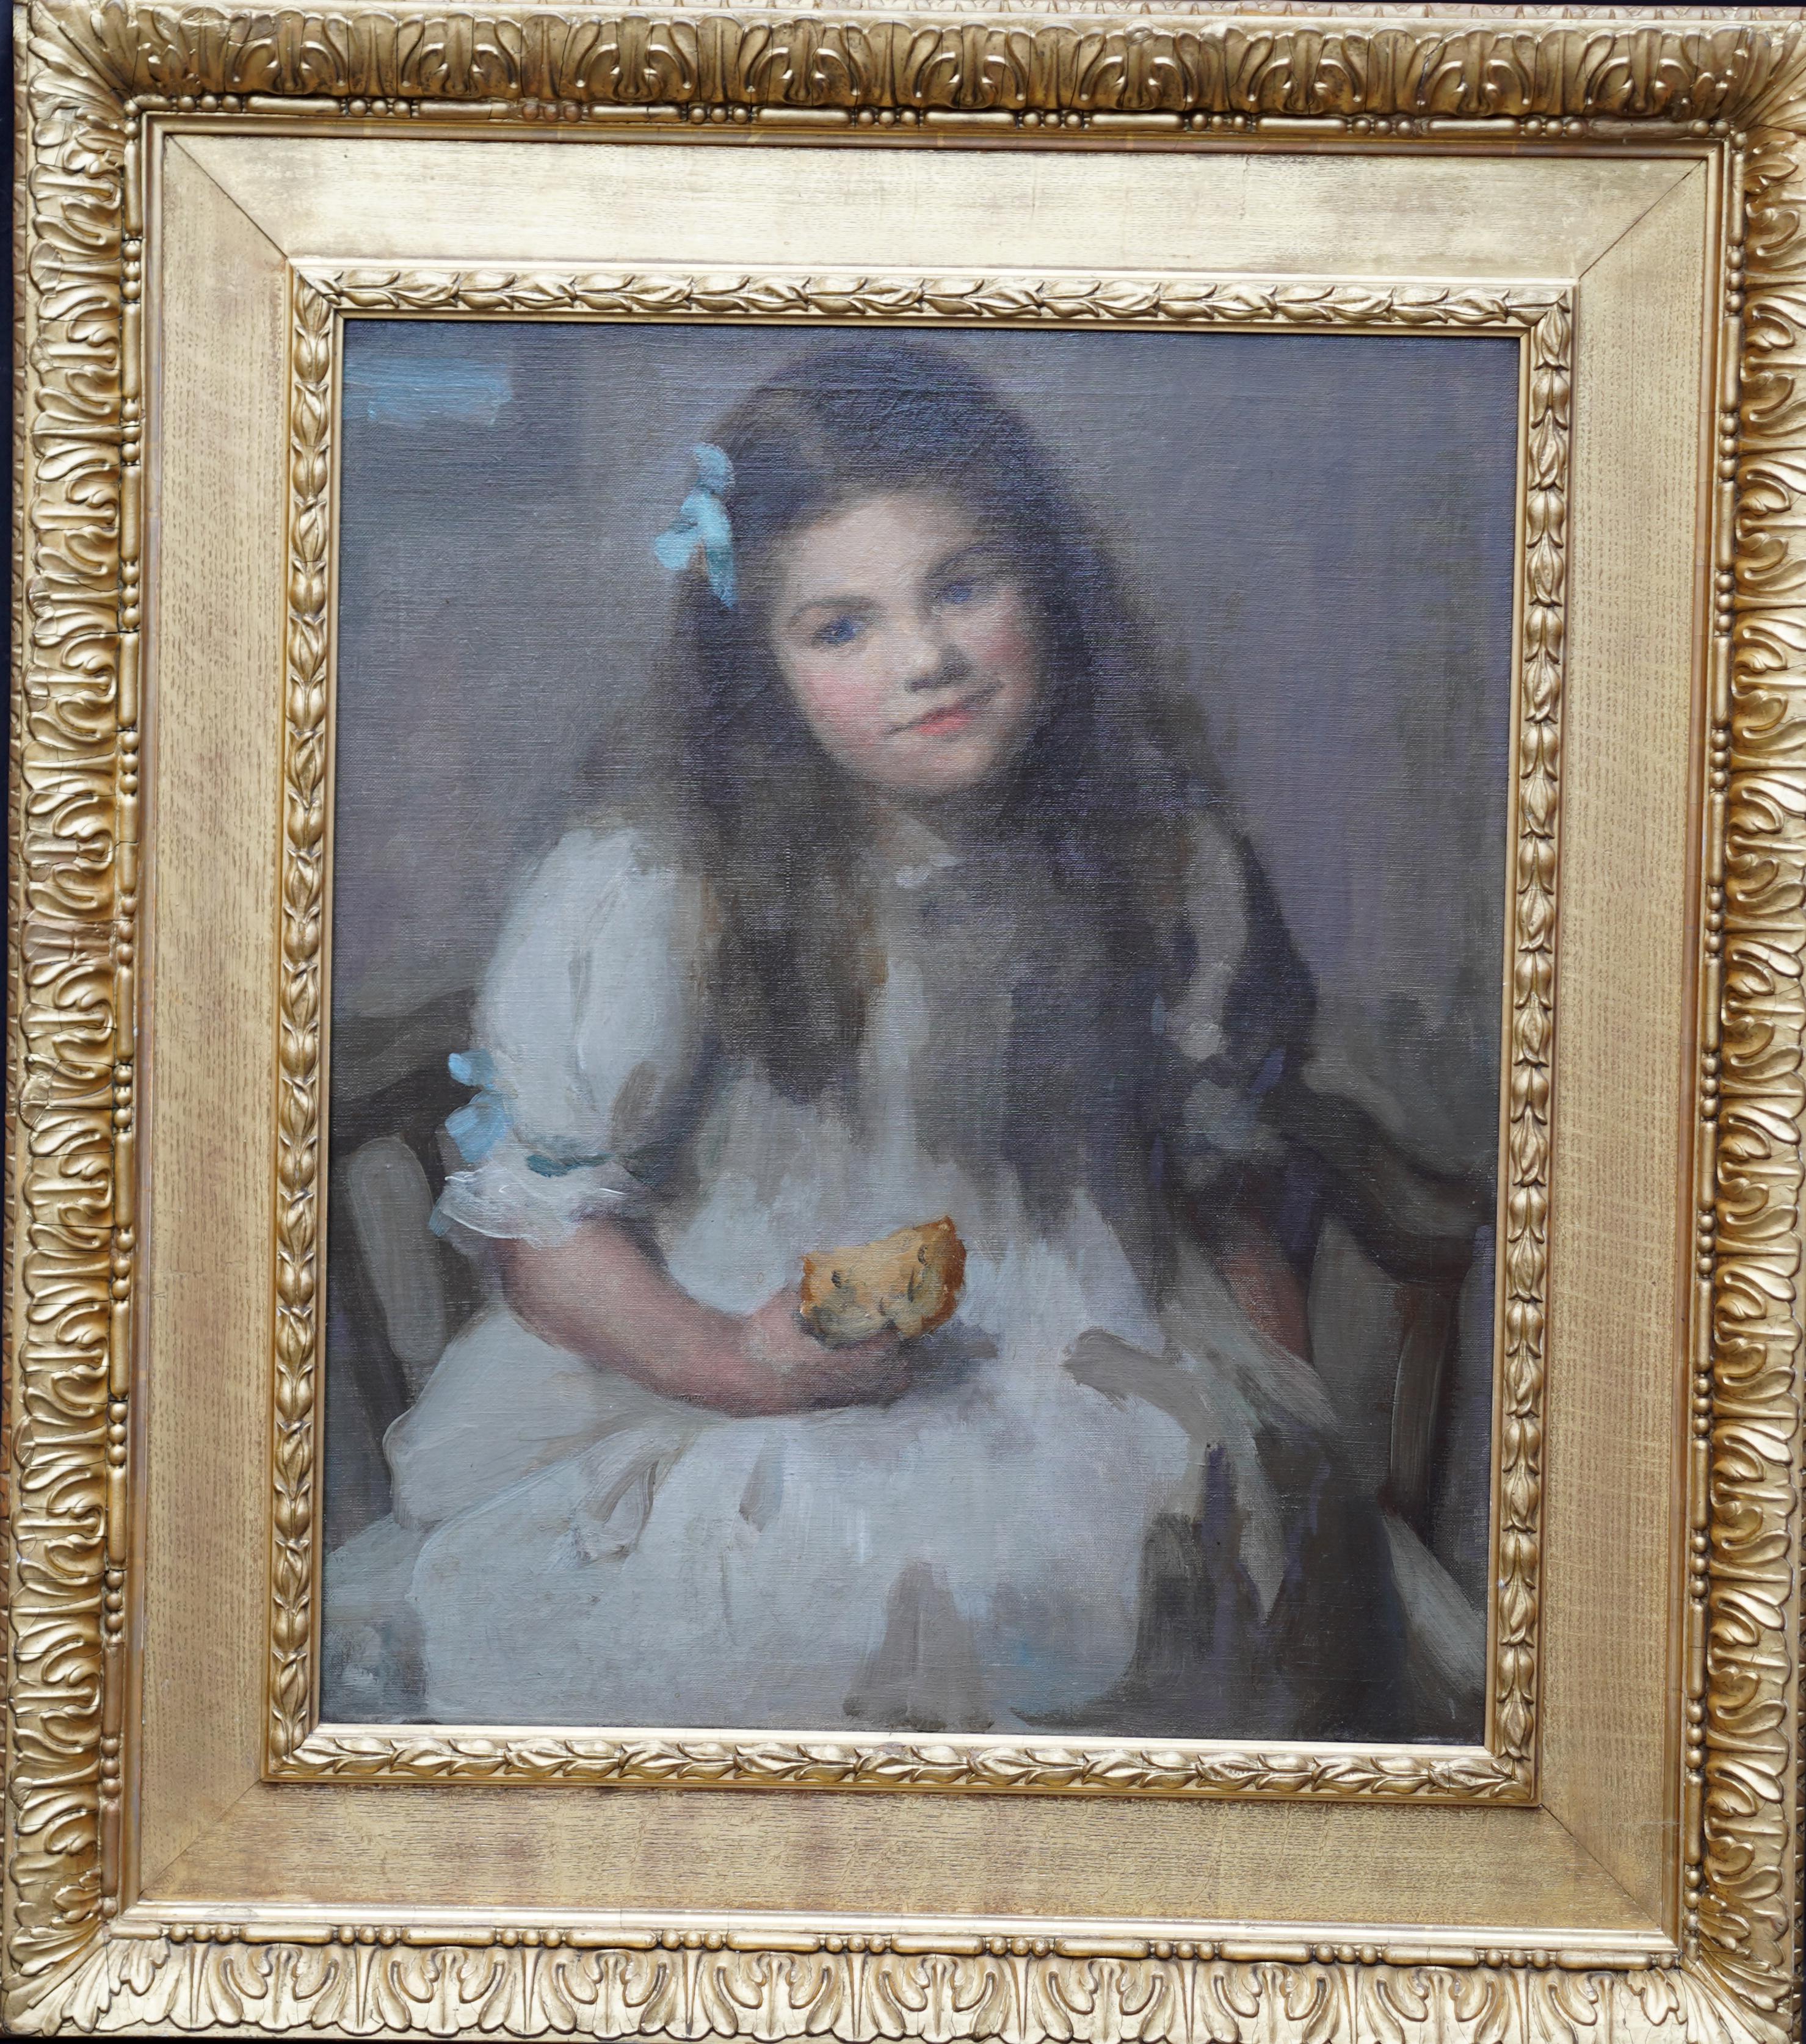 Sybil Maude Portrait Painting - Portrait of a Young Cornish Girl  - British art 1905 oil painting female artist